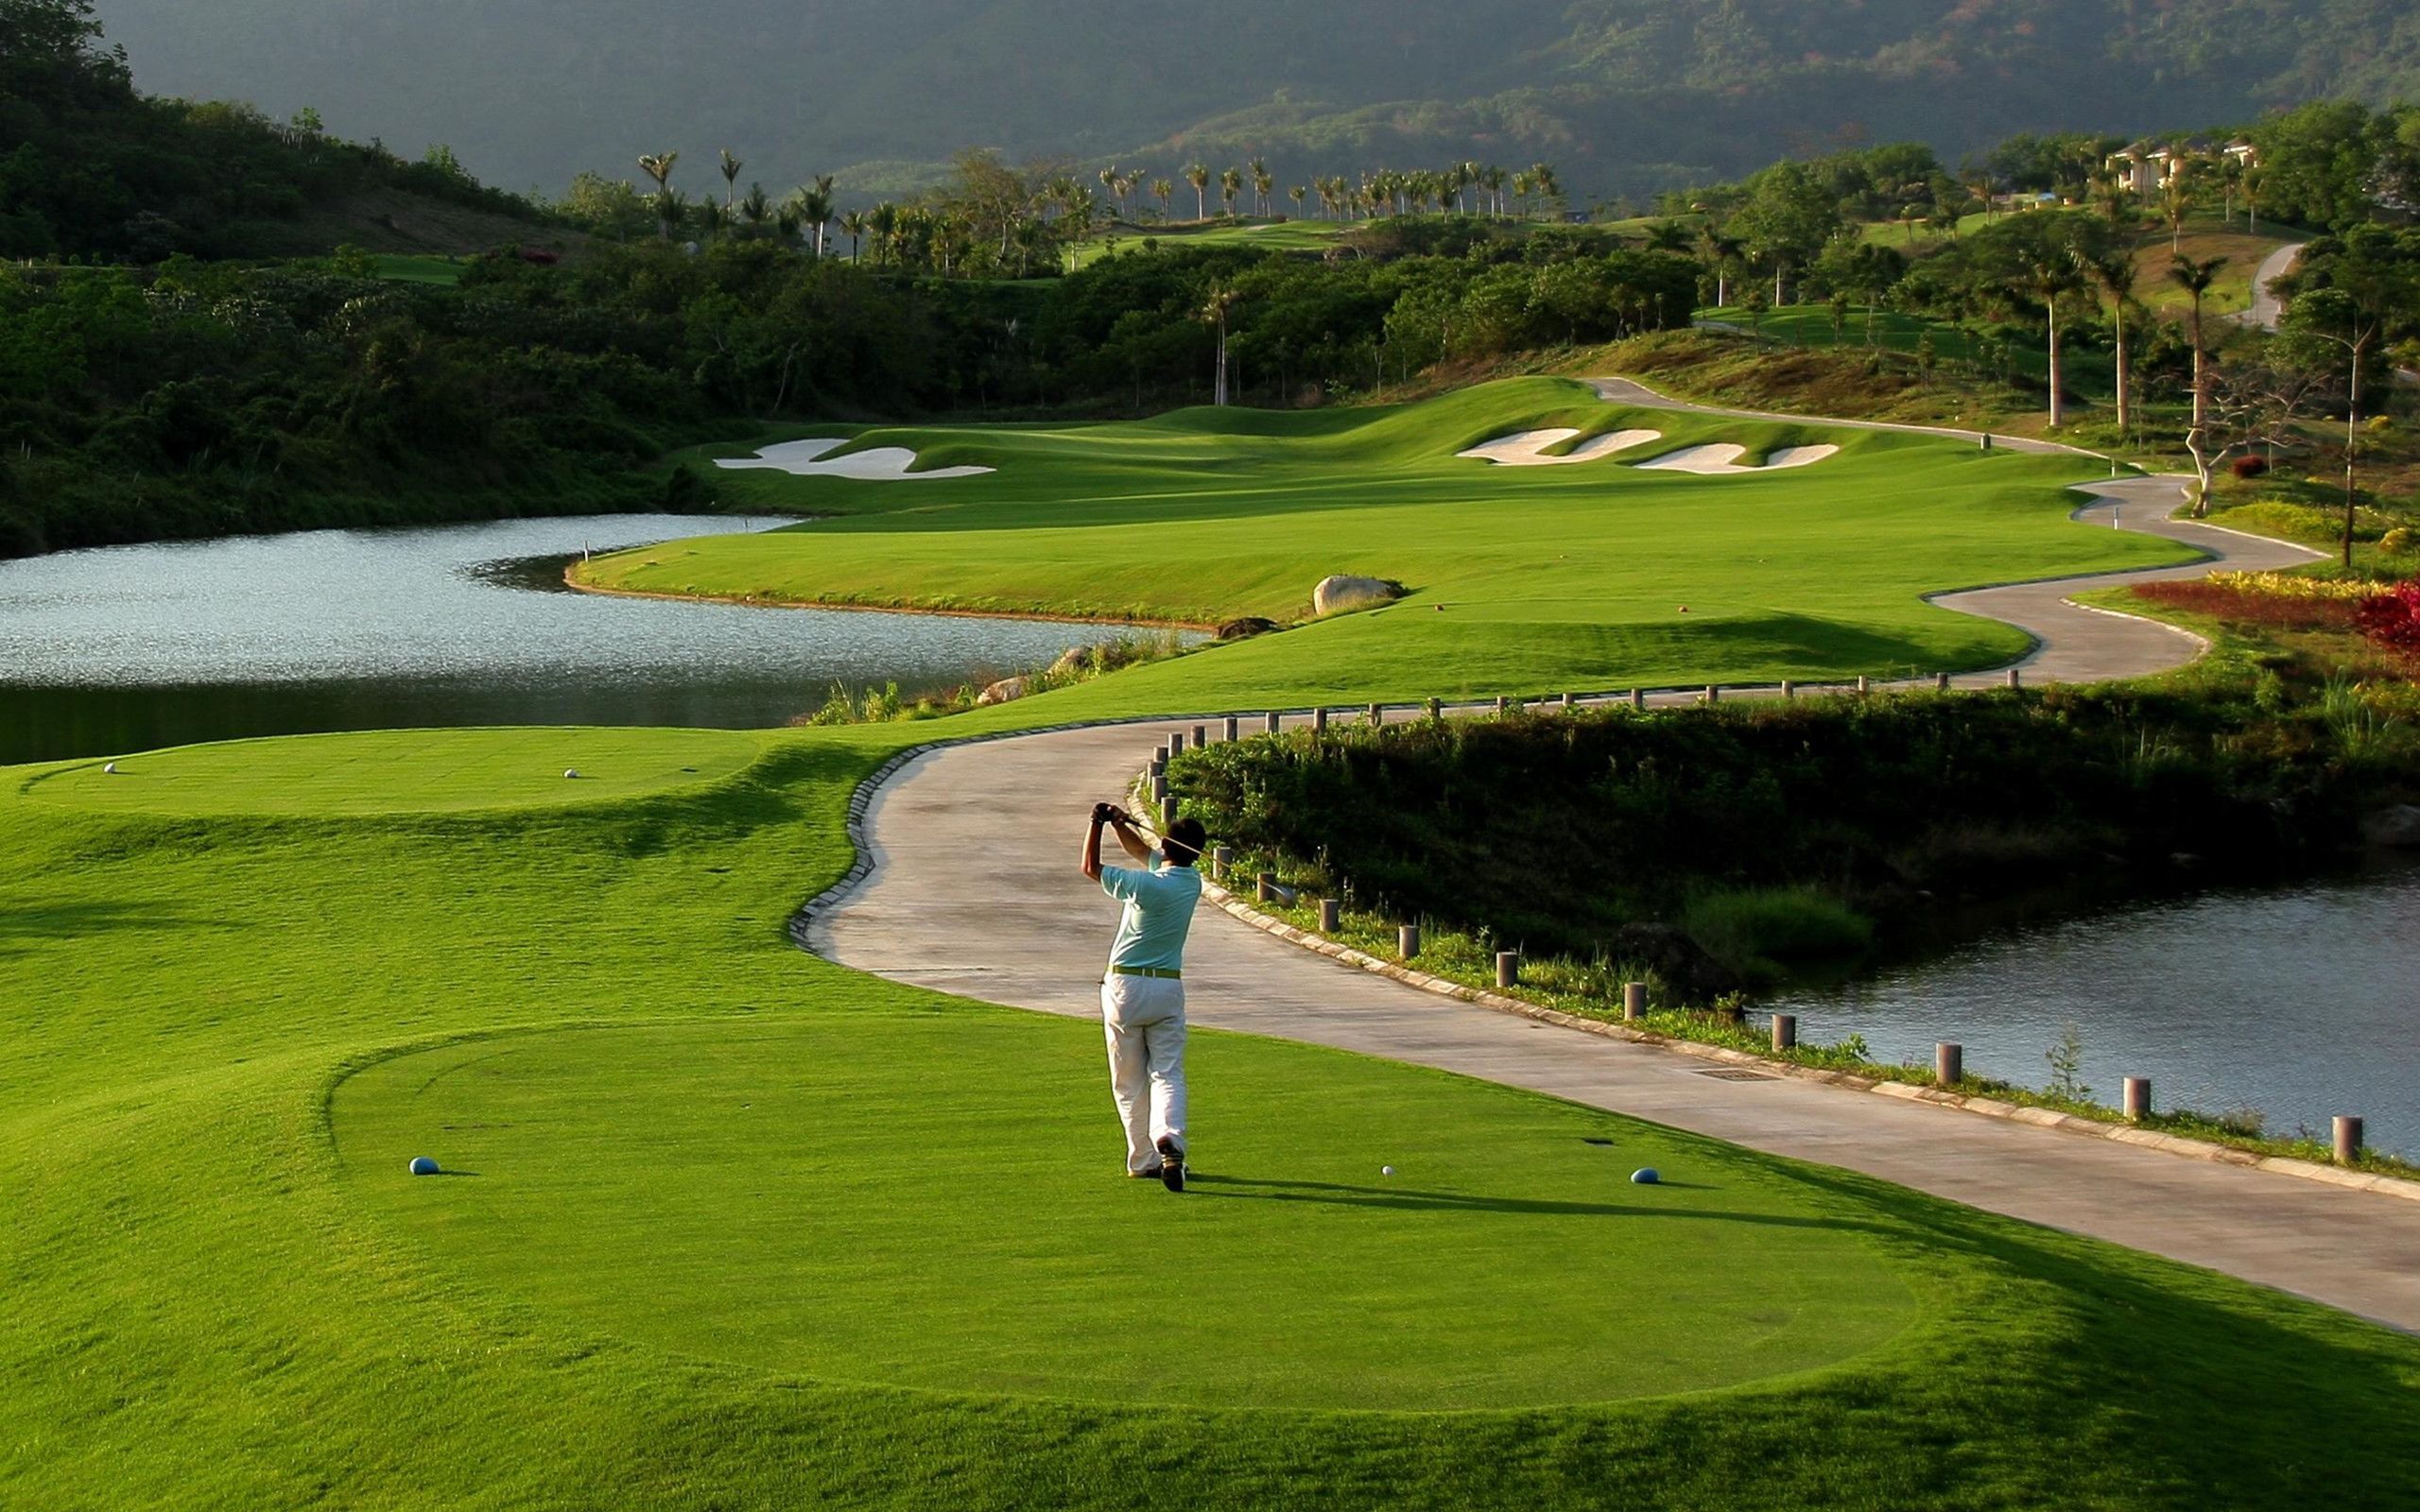 Golf Desktop Wallpaper, Golf Courses Images, New Wallpapers